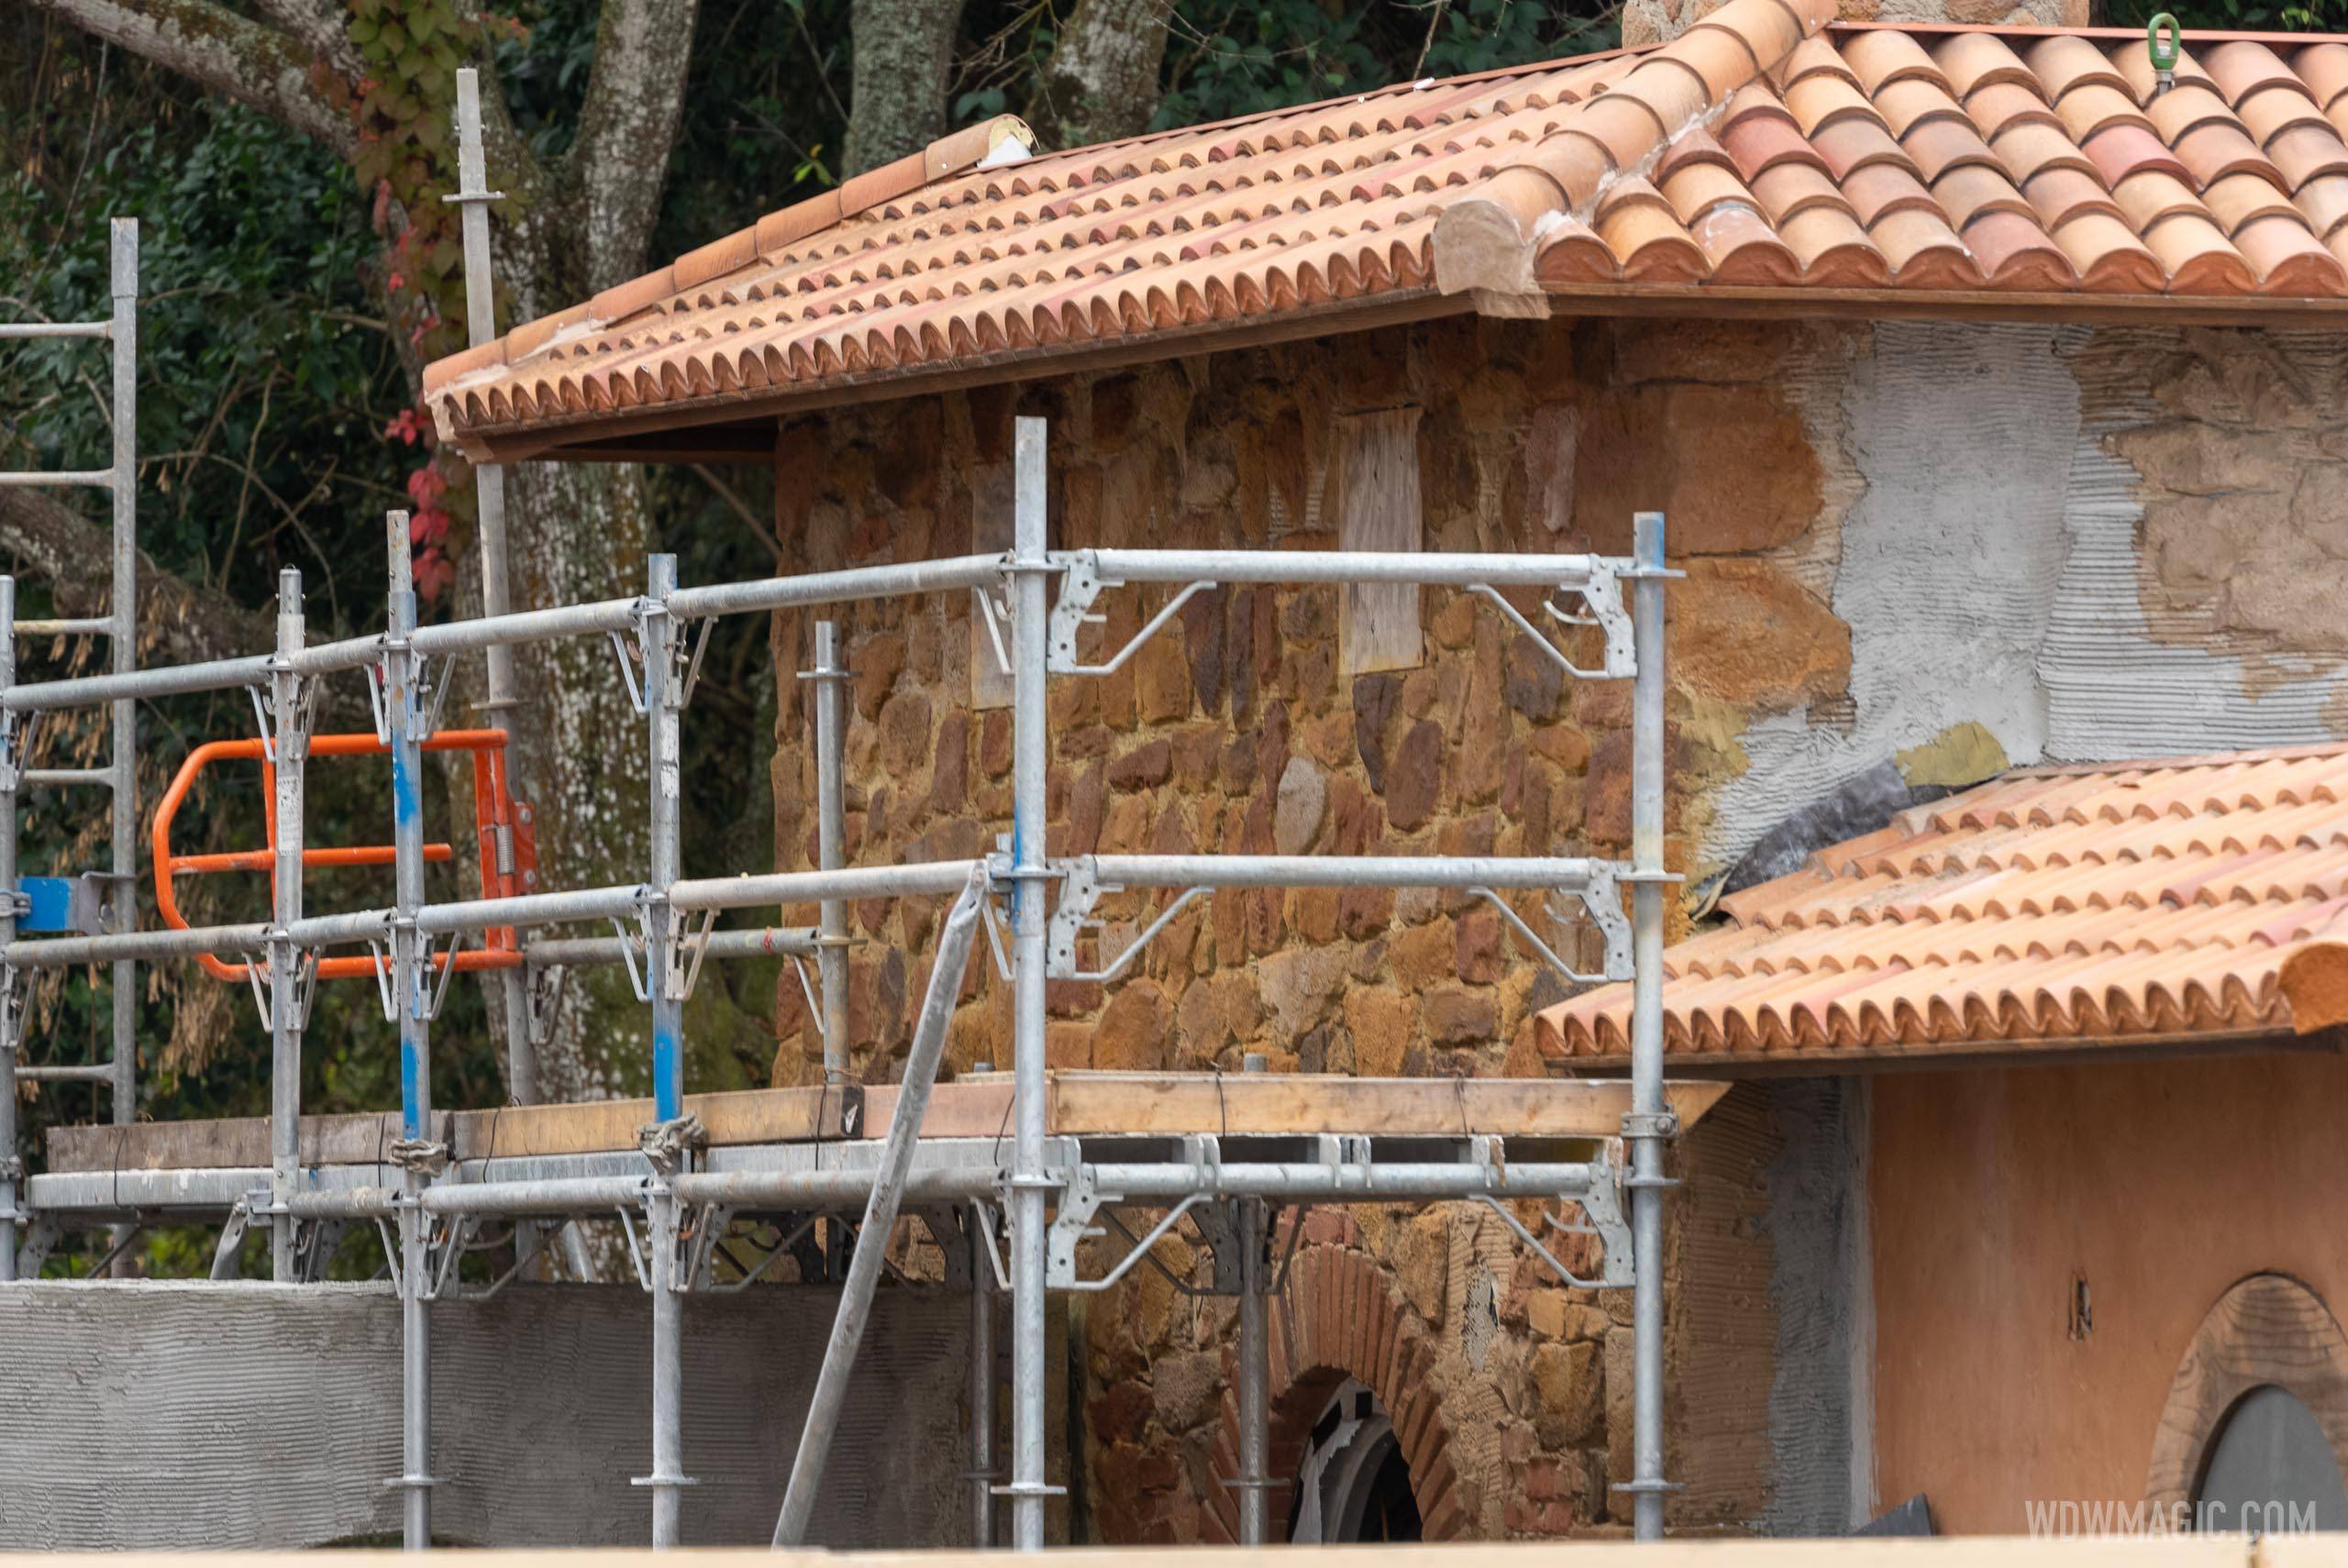 Gelateria Toscana construction - January 26 2021